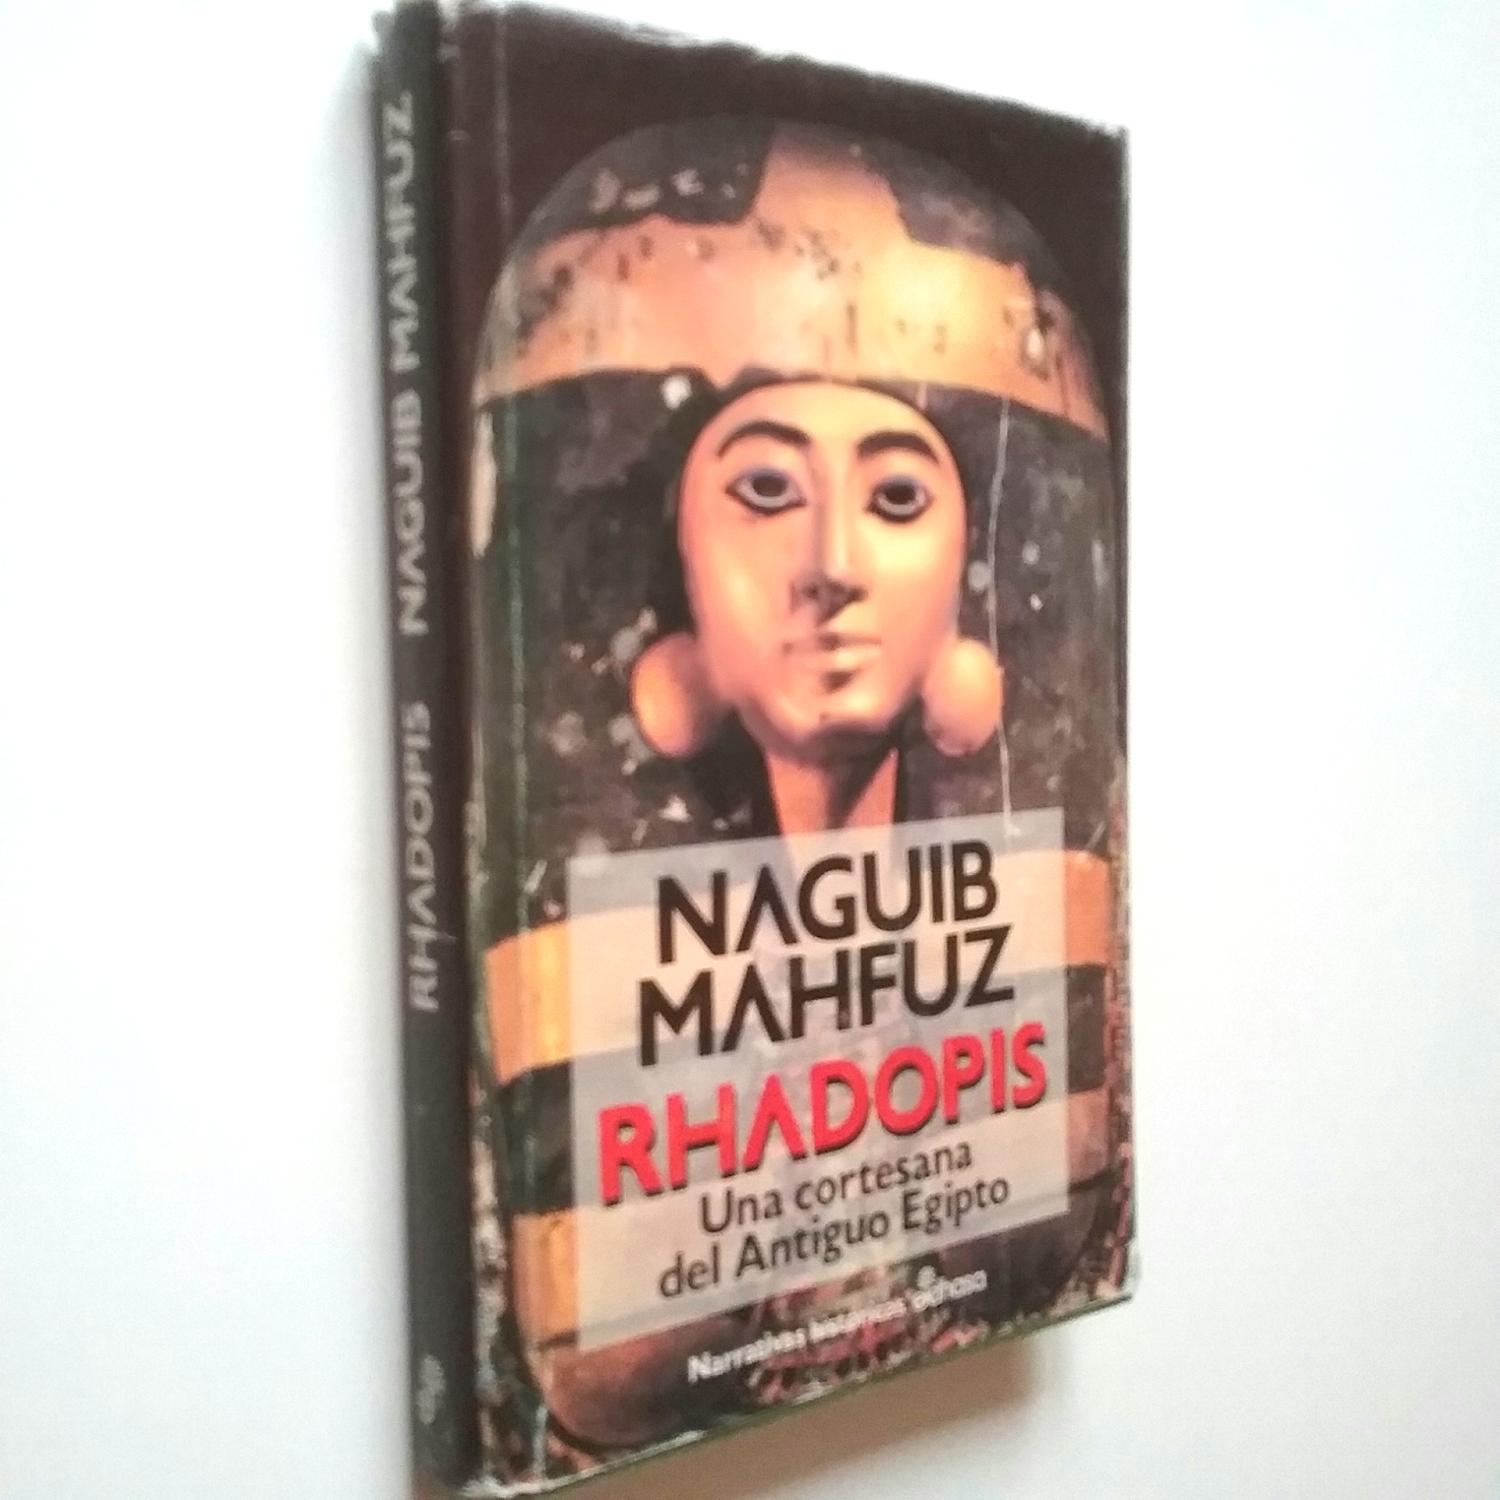 Rhadopis, la cortesana - Naguib Mahfuz (Mahfouz)